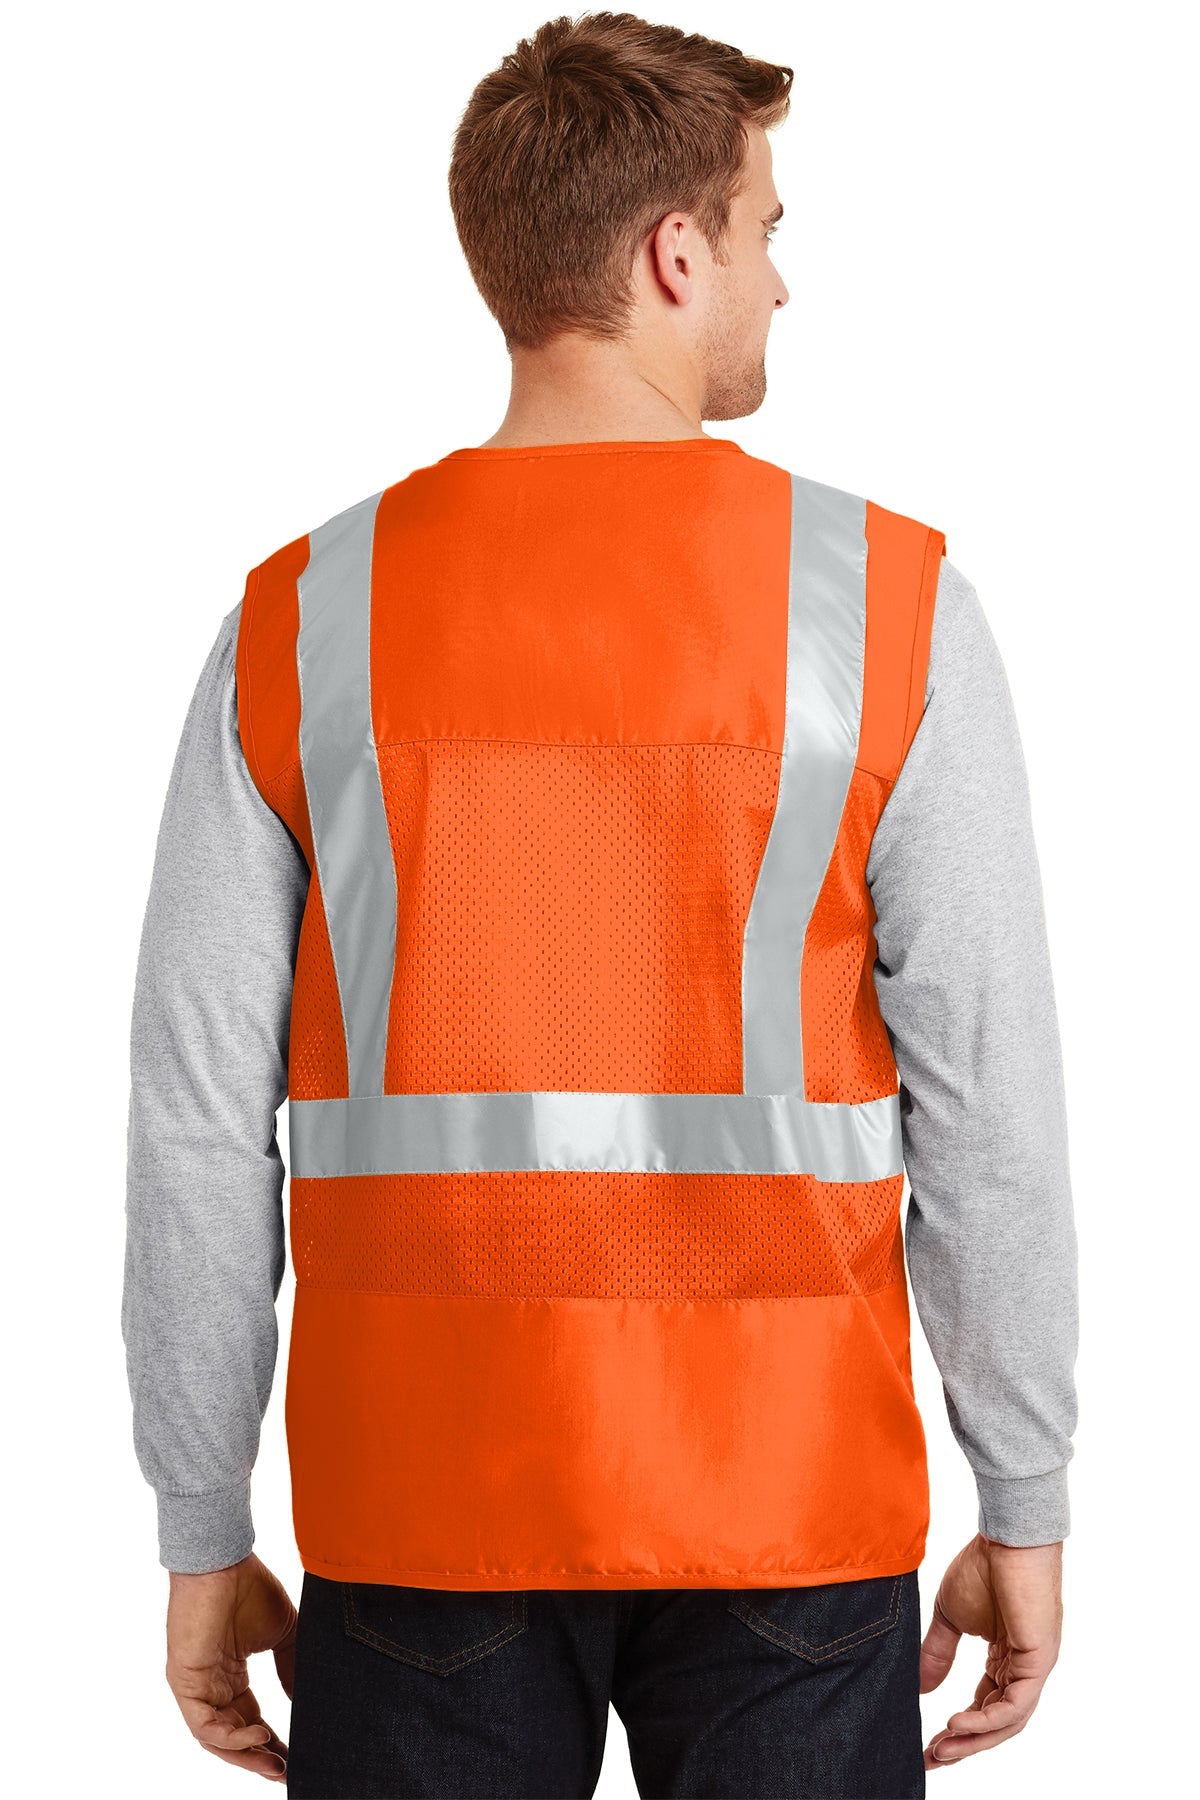 cornerstone_csv405 _safety orange_company_logo_jackets